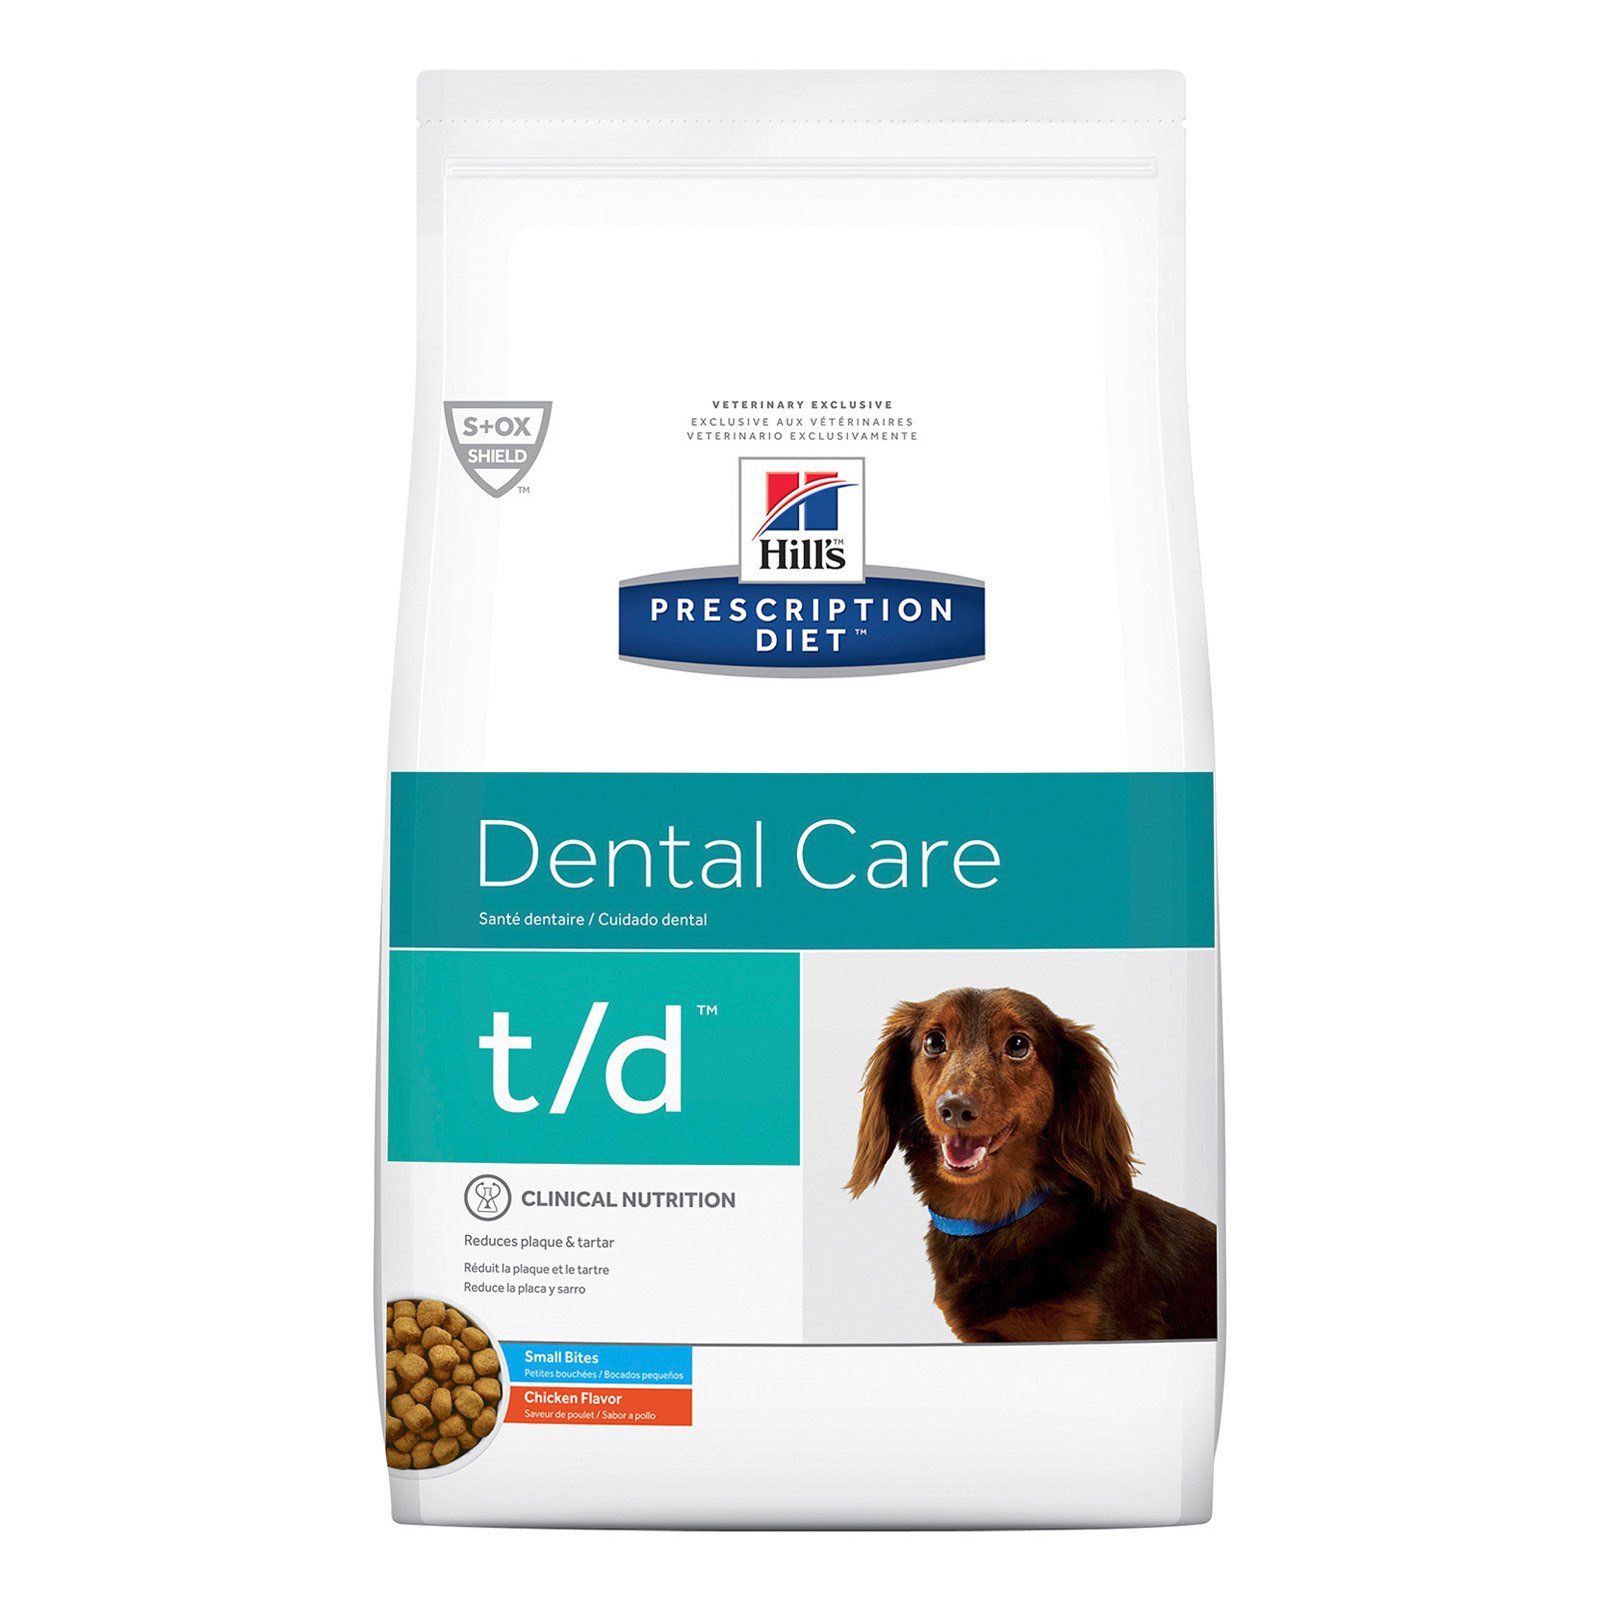 Hill's Prescription Diet t/d Small Bites Dental Care Dry Dog Food  